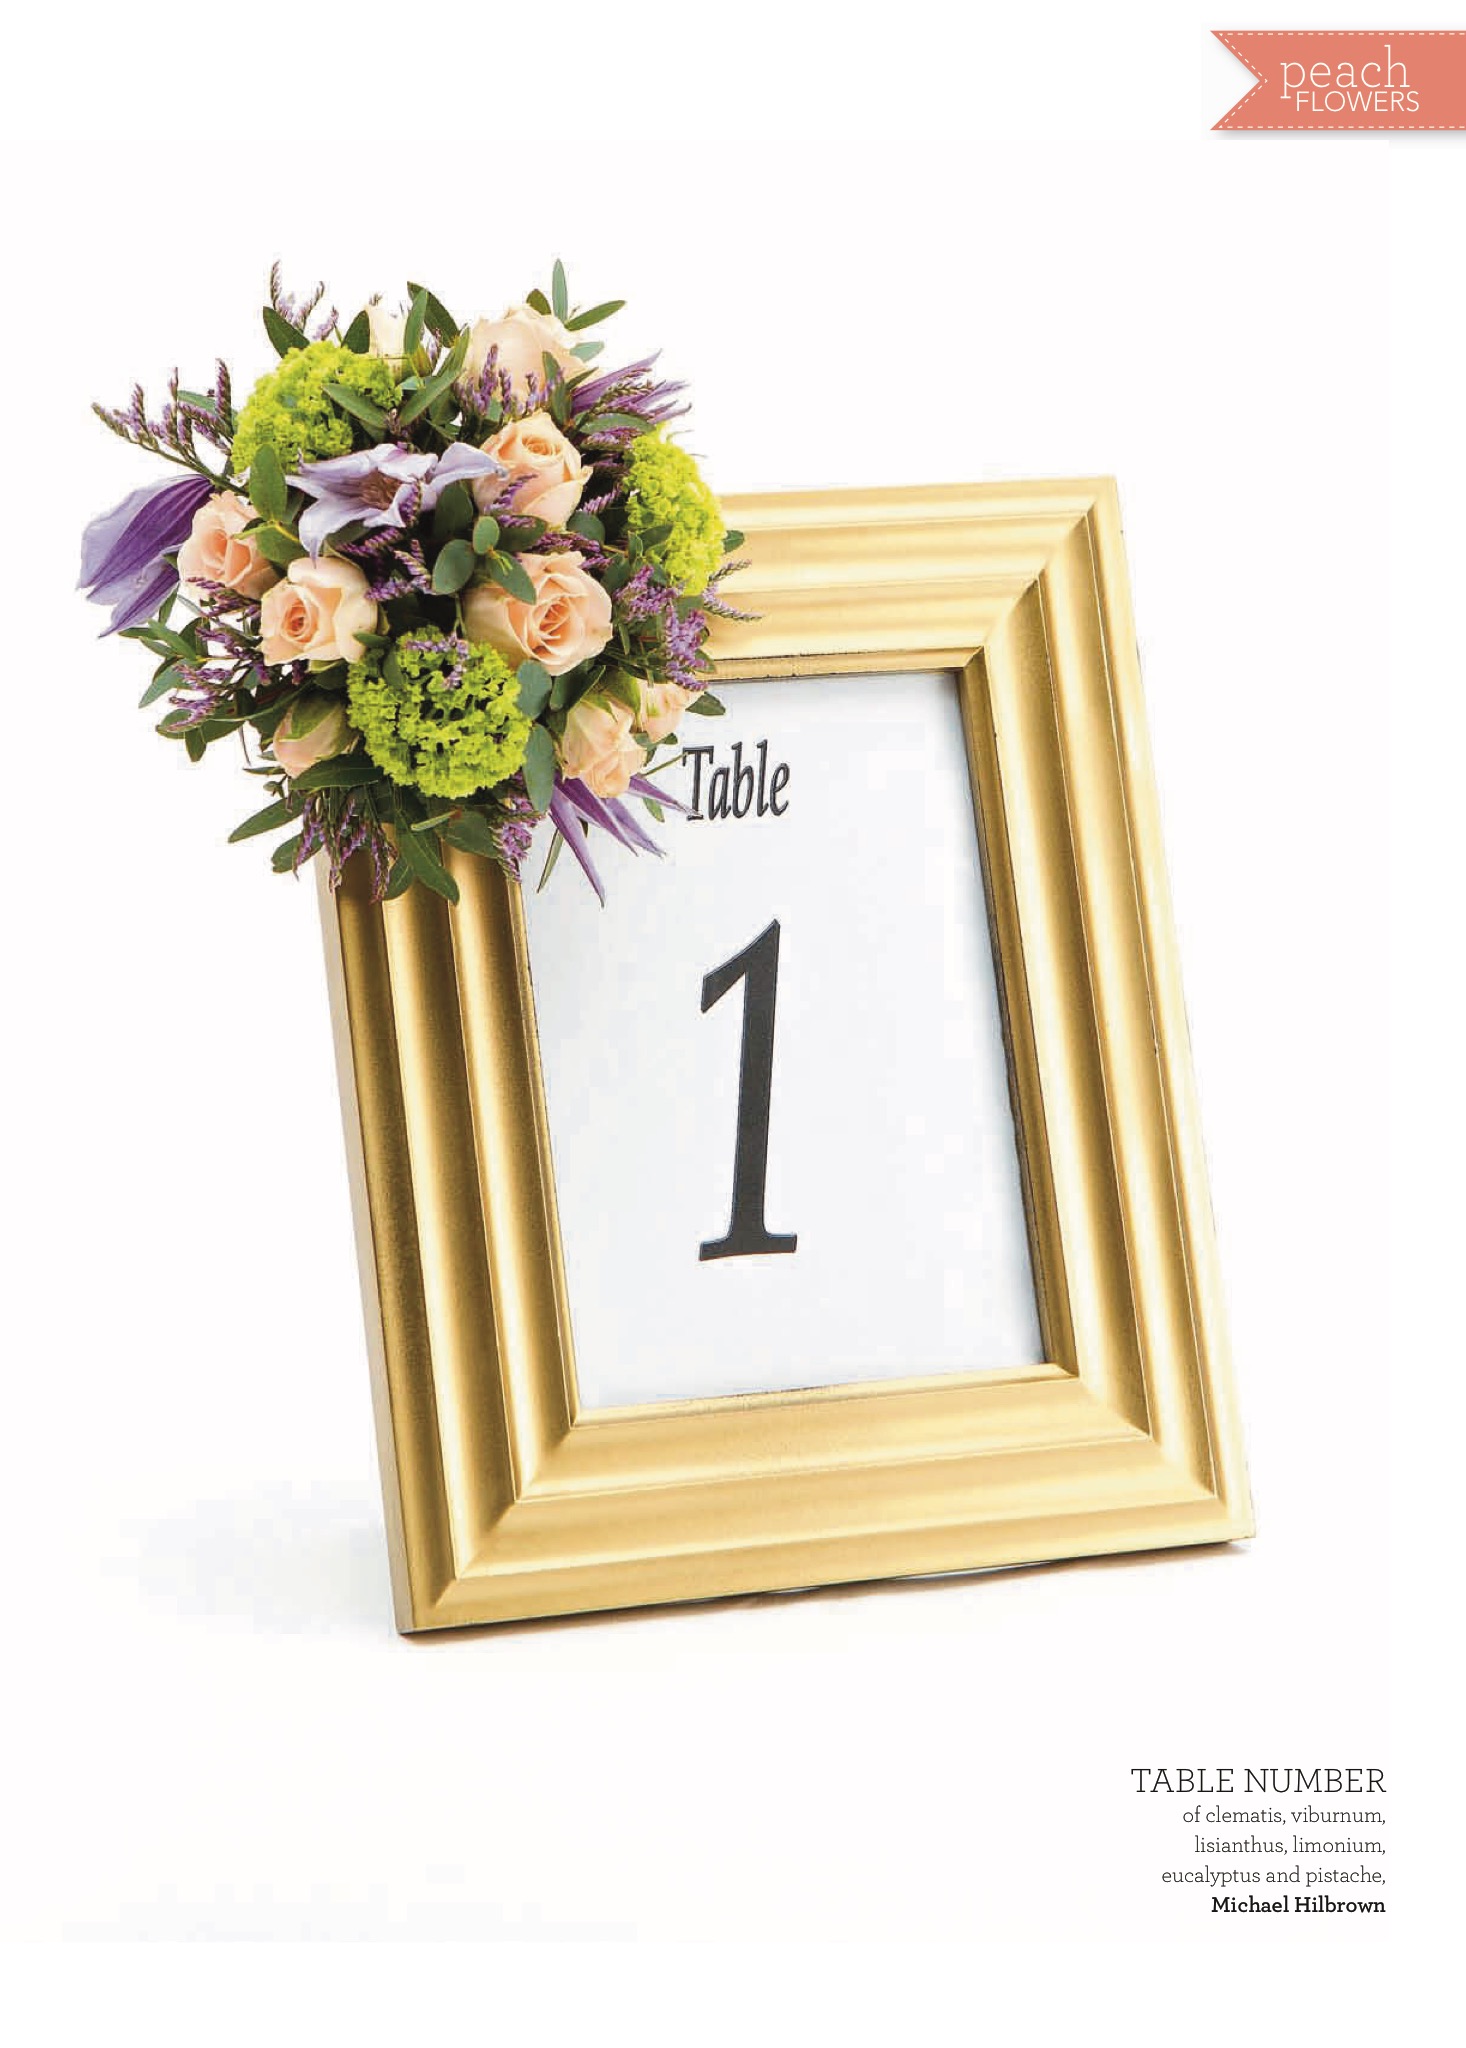 Michael Hilbrown Florist - Table Number Floral Design - Wedding Flowers Magazine July & August 2016.jpg